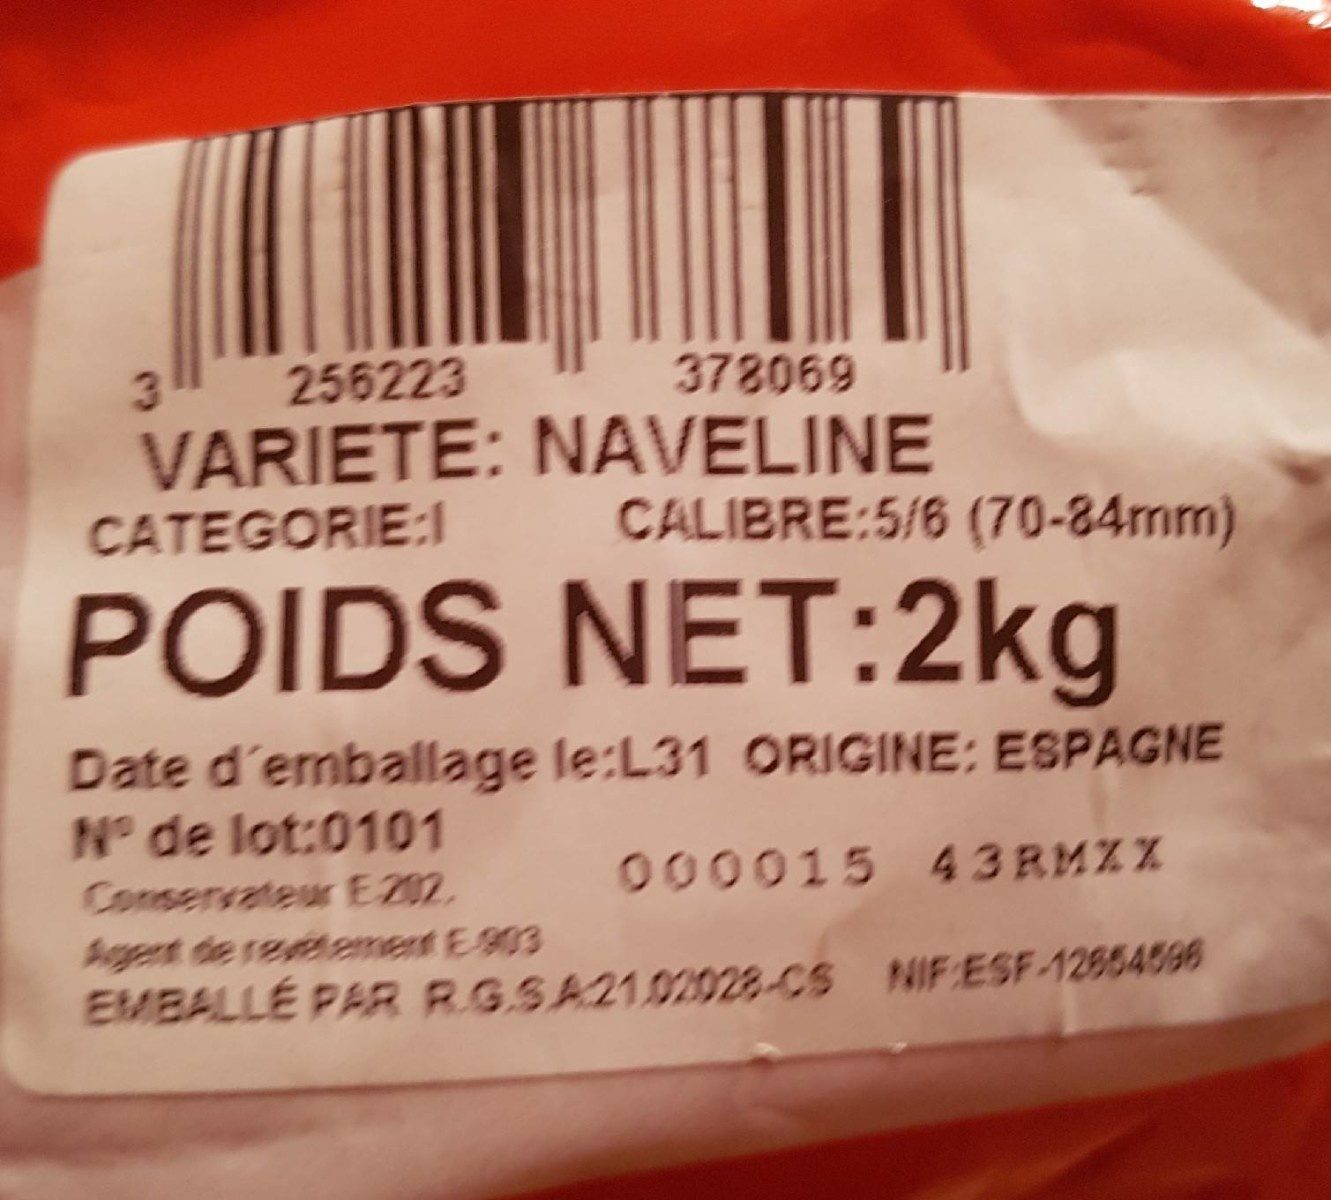 Orange à dessert Naveline, calibre 5/6 catégorie 1 - Ingredients - fr